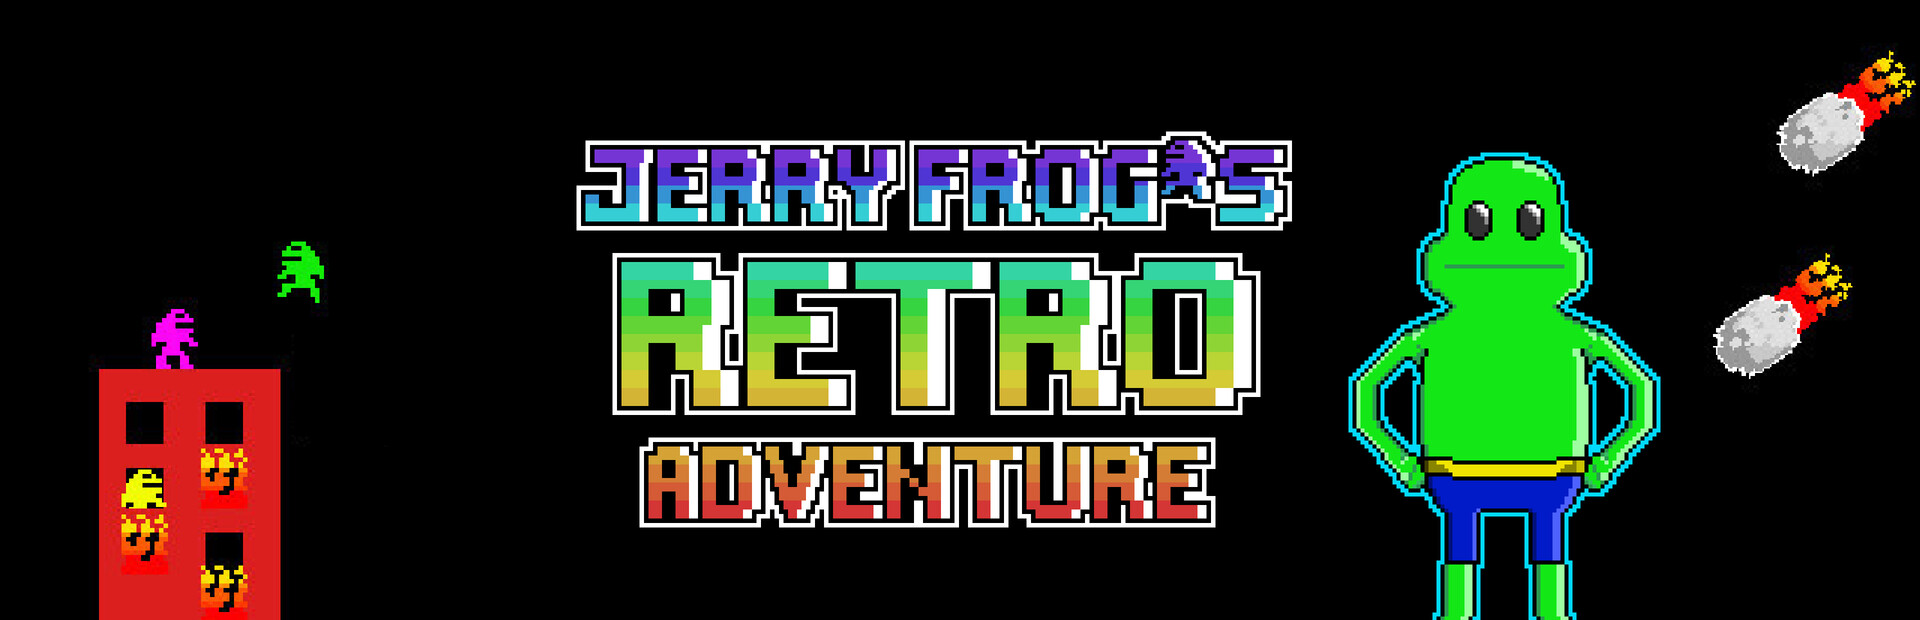 Jerry Frog's Retro Adventure cover image